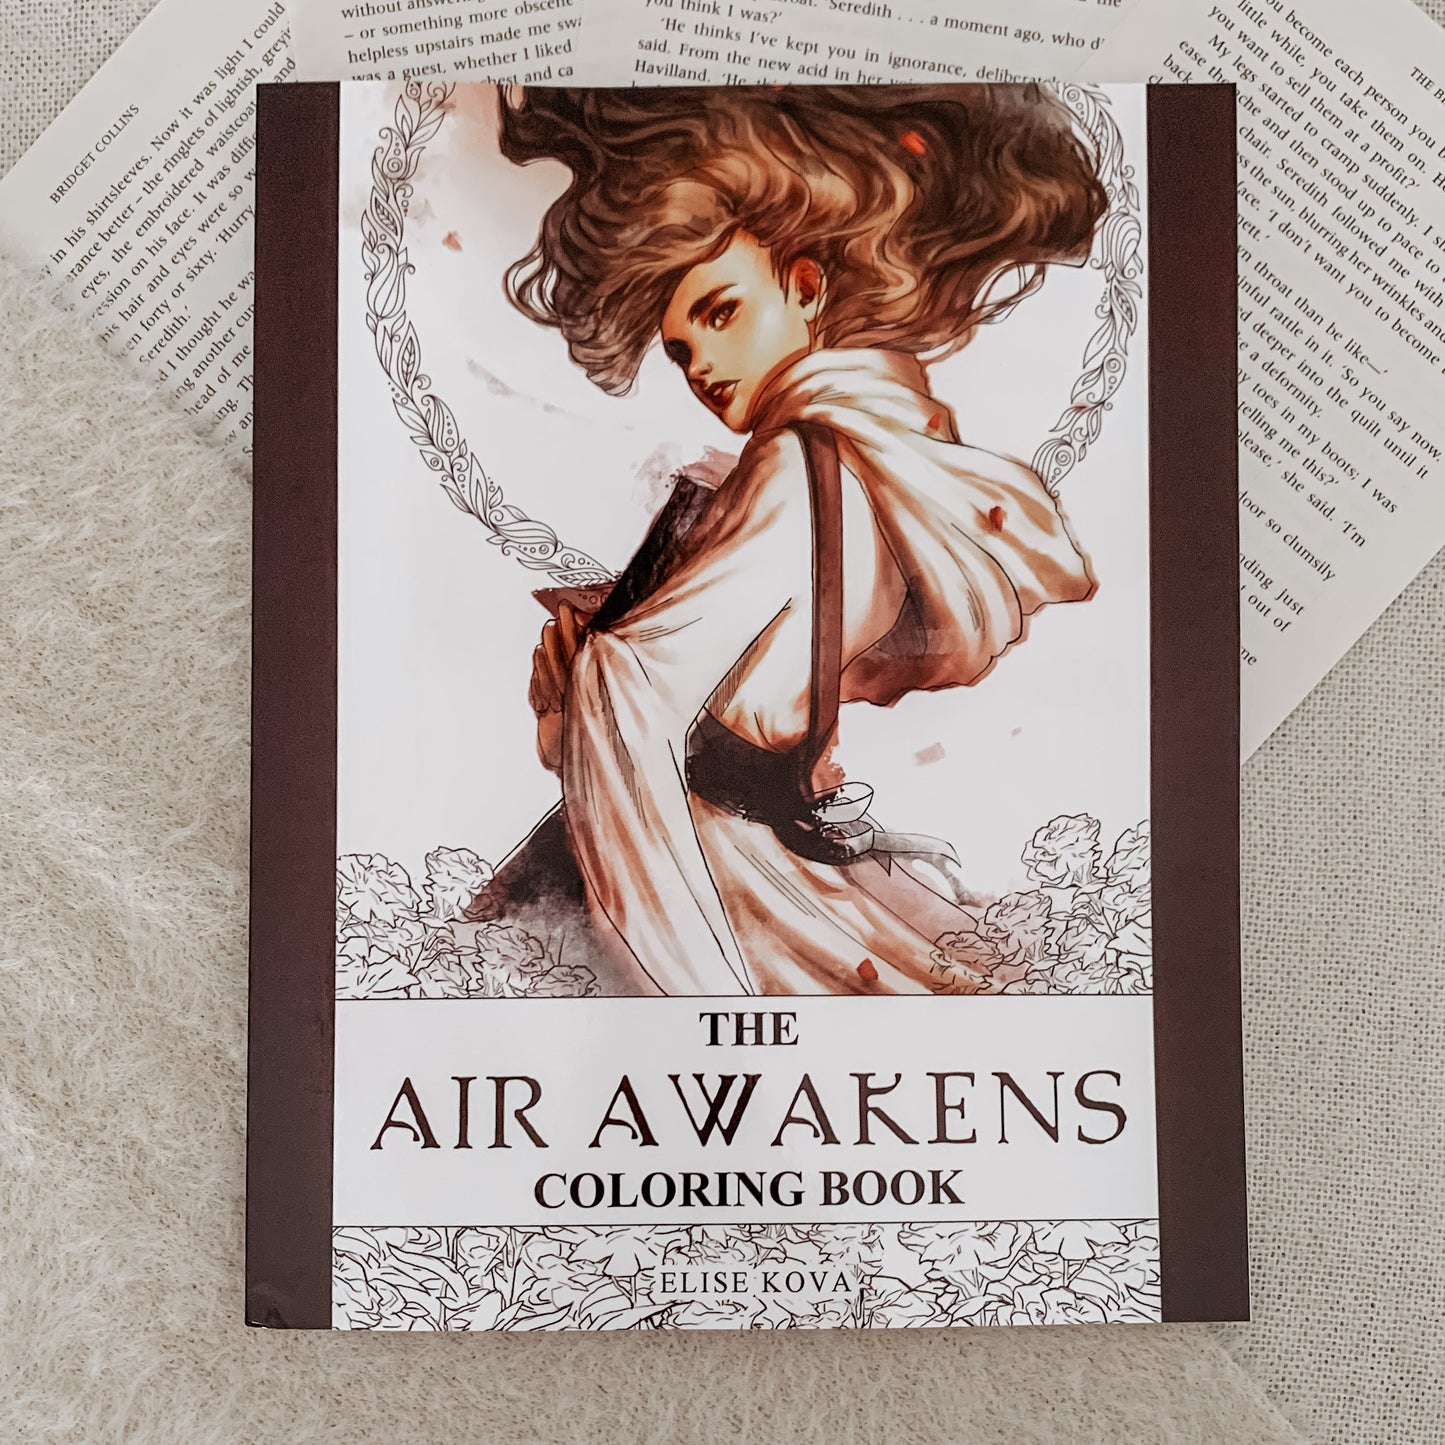 The Air Awakens Colouring Book by Elise Kova